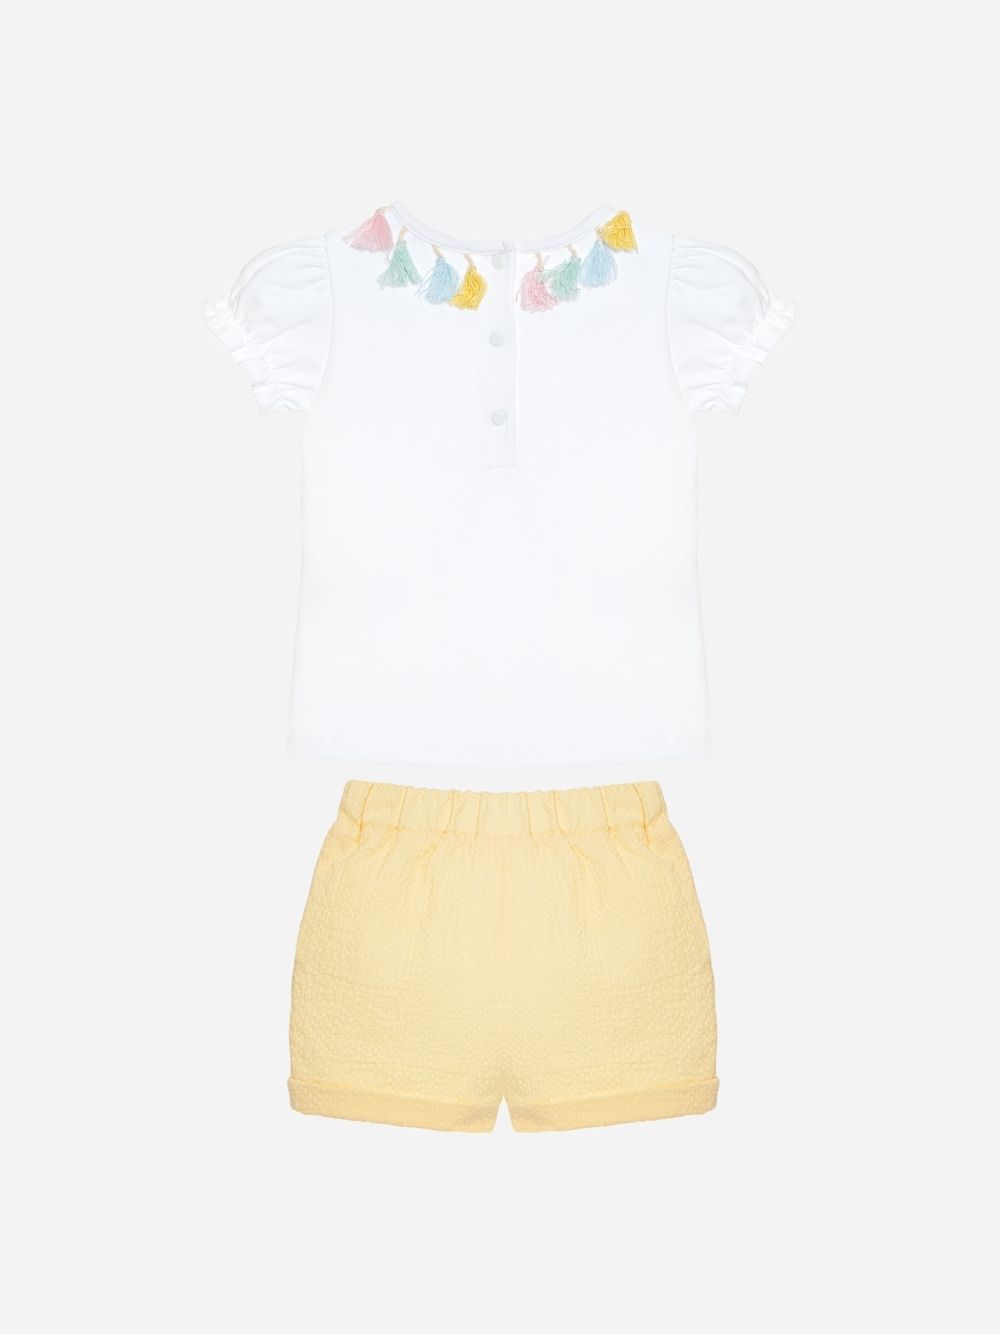 White t-shirt and yellow shorts set